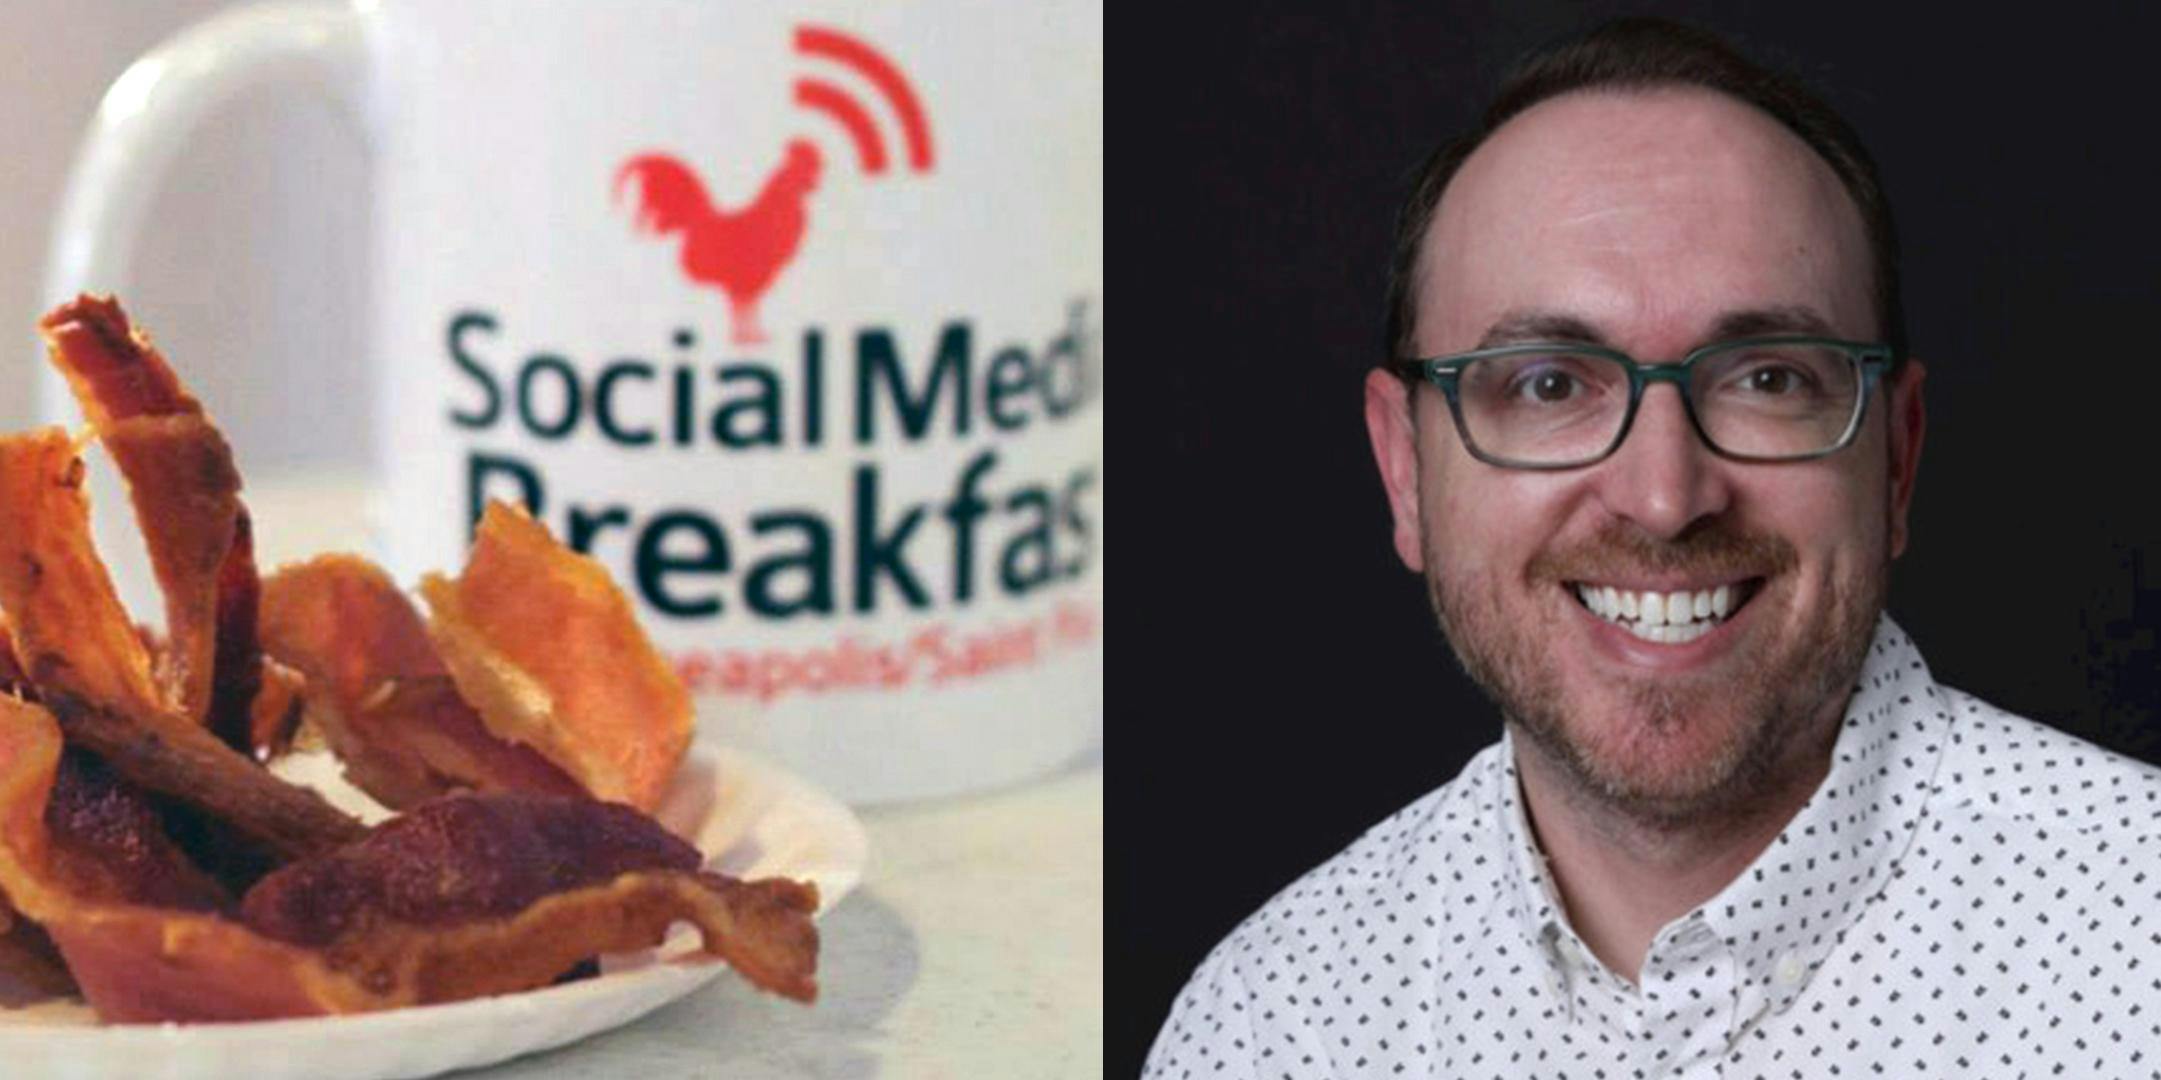 Social Media Breakfast MSP: A Conversation with Greg Swan